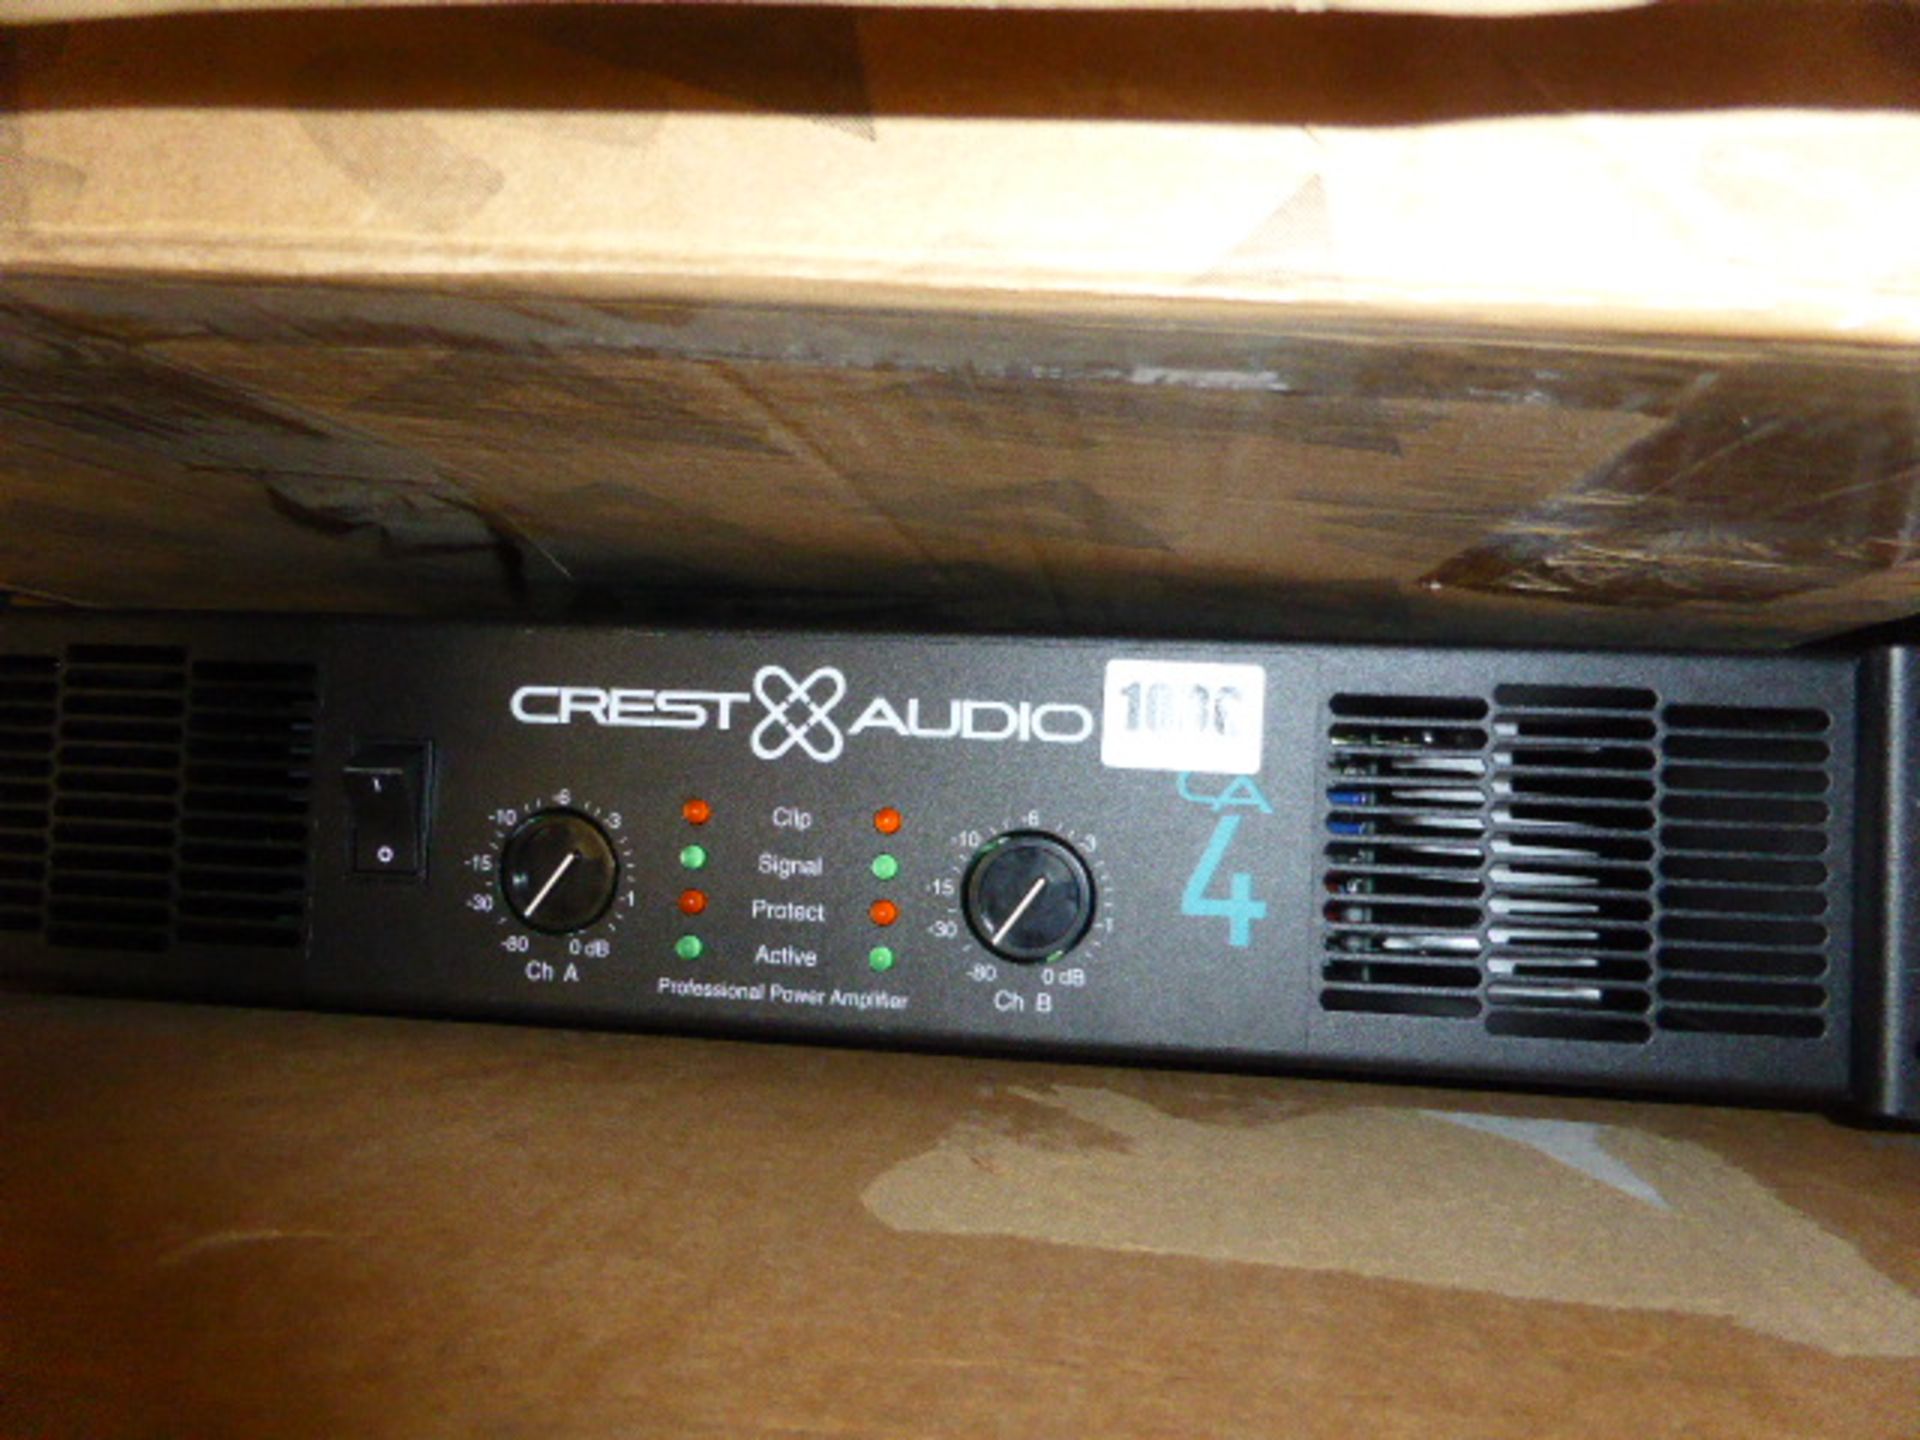 Crest auto CA4 professional power amplifier